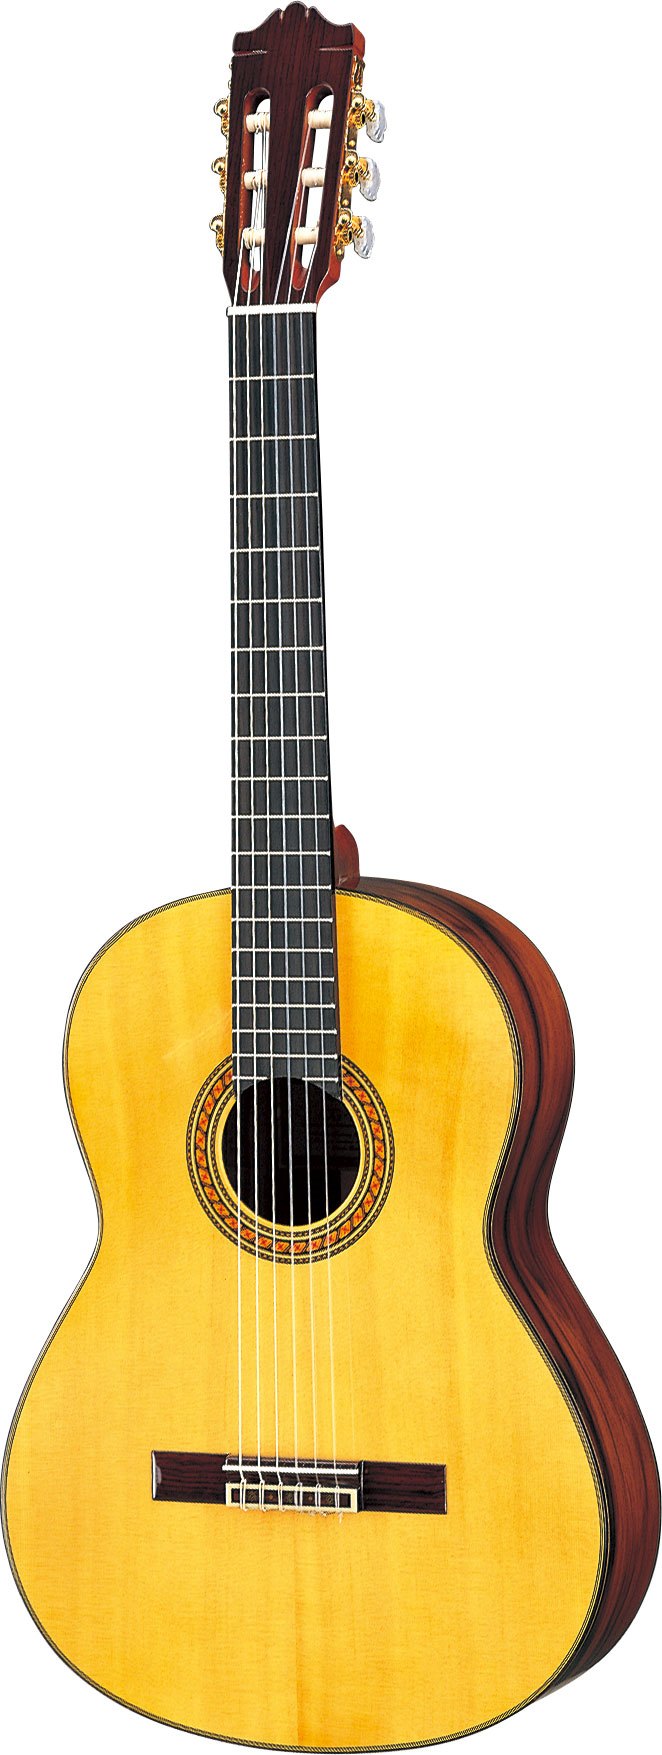 YAMAHA CG-151S アコースティックギター-